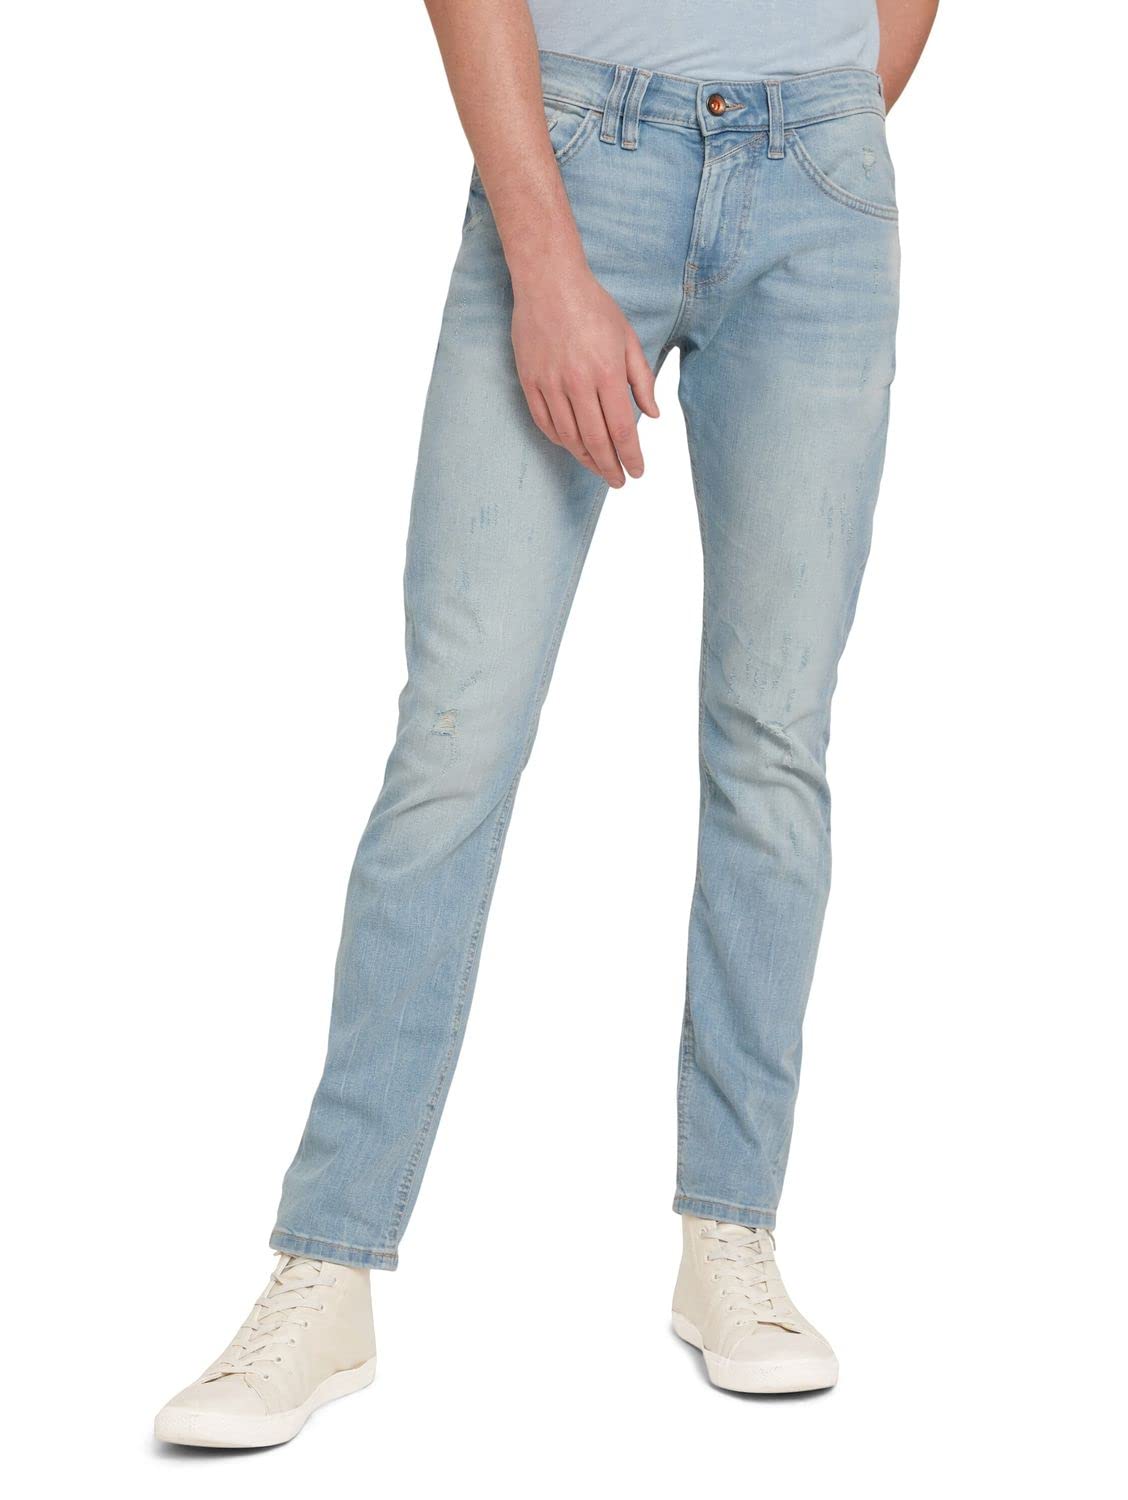 TOM TAILOR Denim Herren Piers Slim Jeans 1029730, 10117 - Used Bleached Blue Denim, 36W / 32L